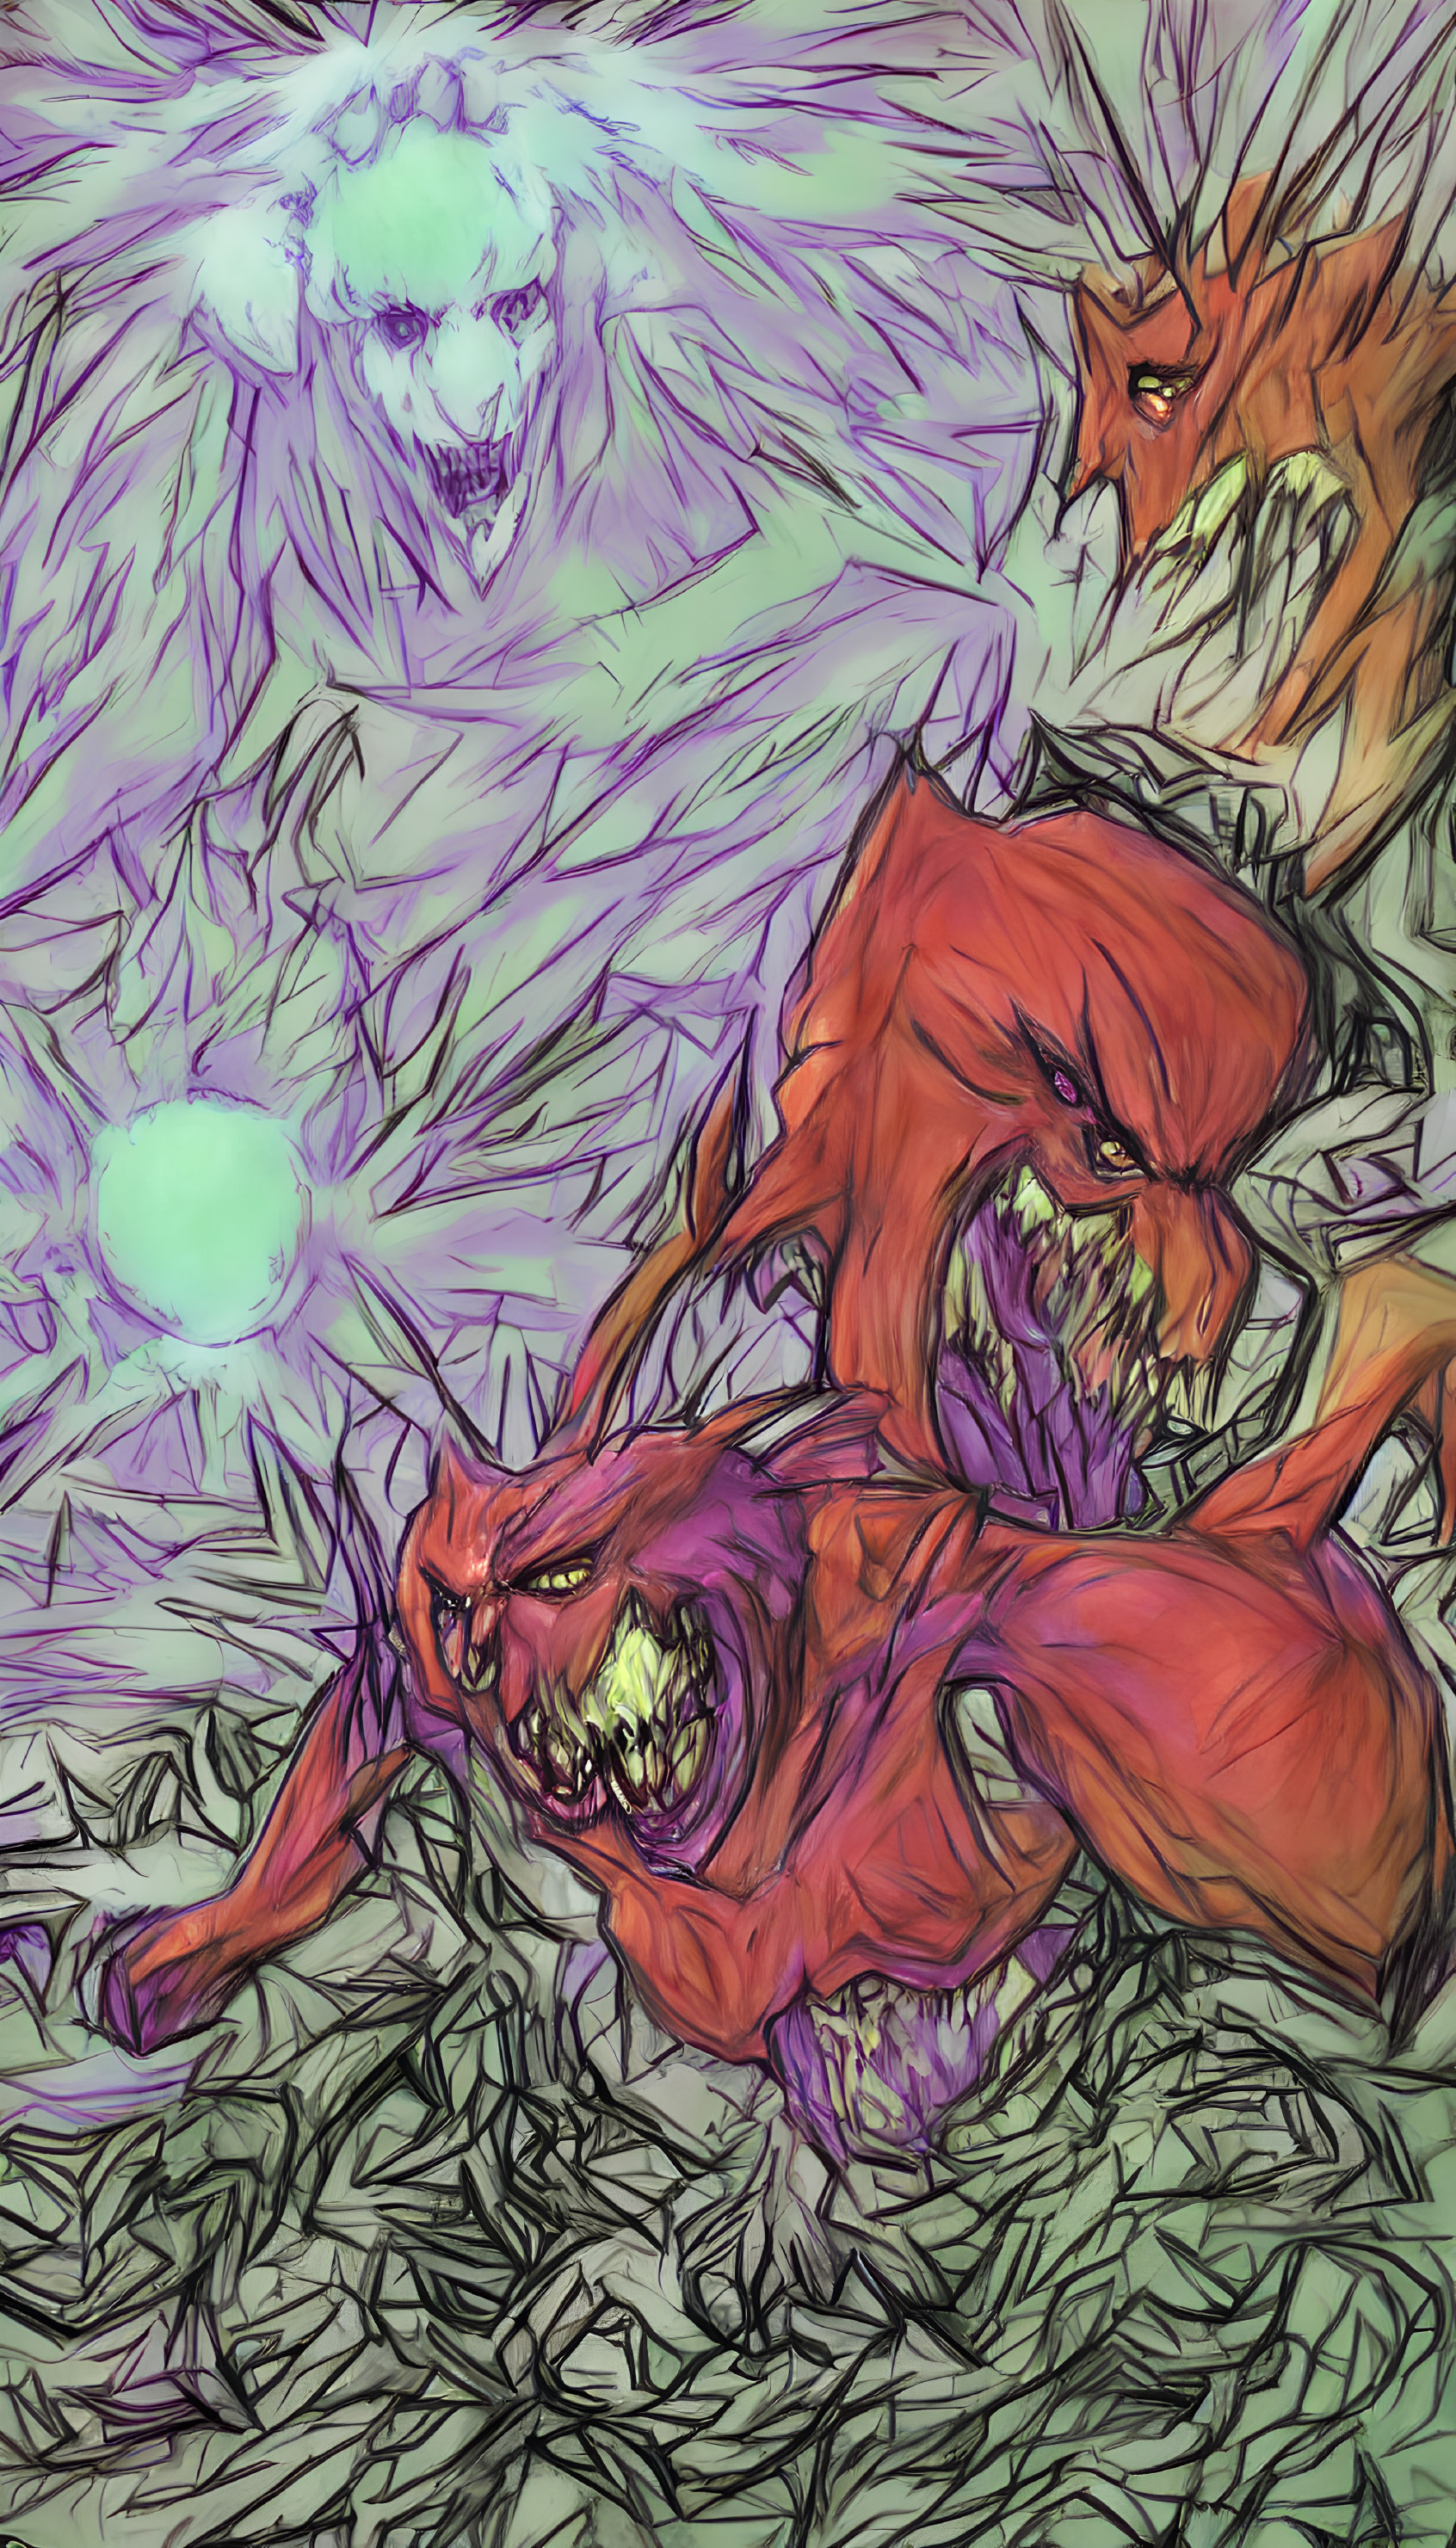 Digital artwork of ferocious dragons clashing in purple clouds